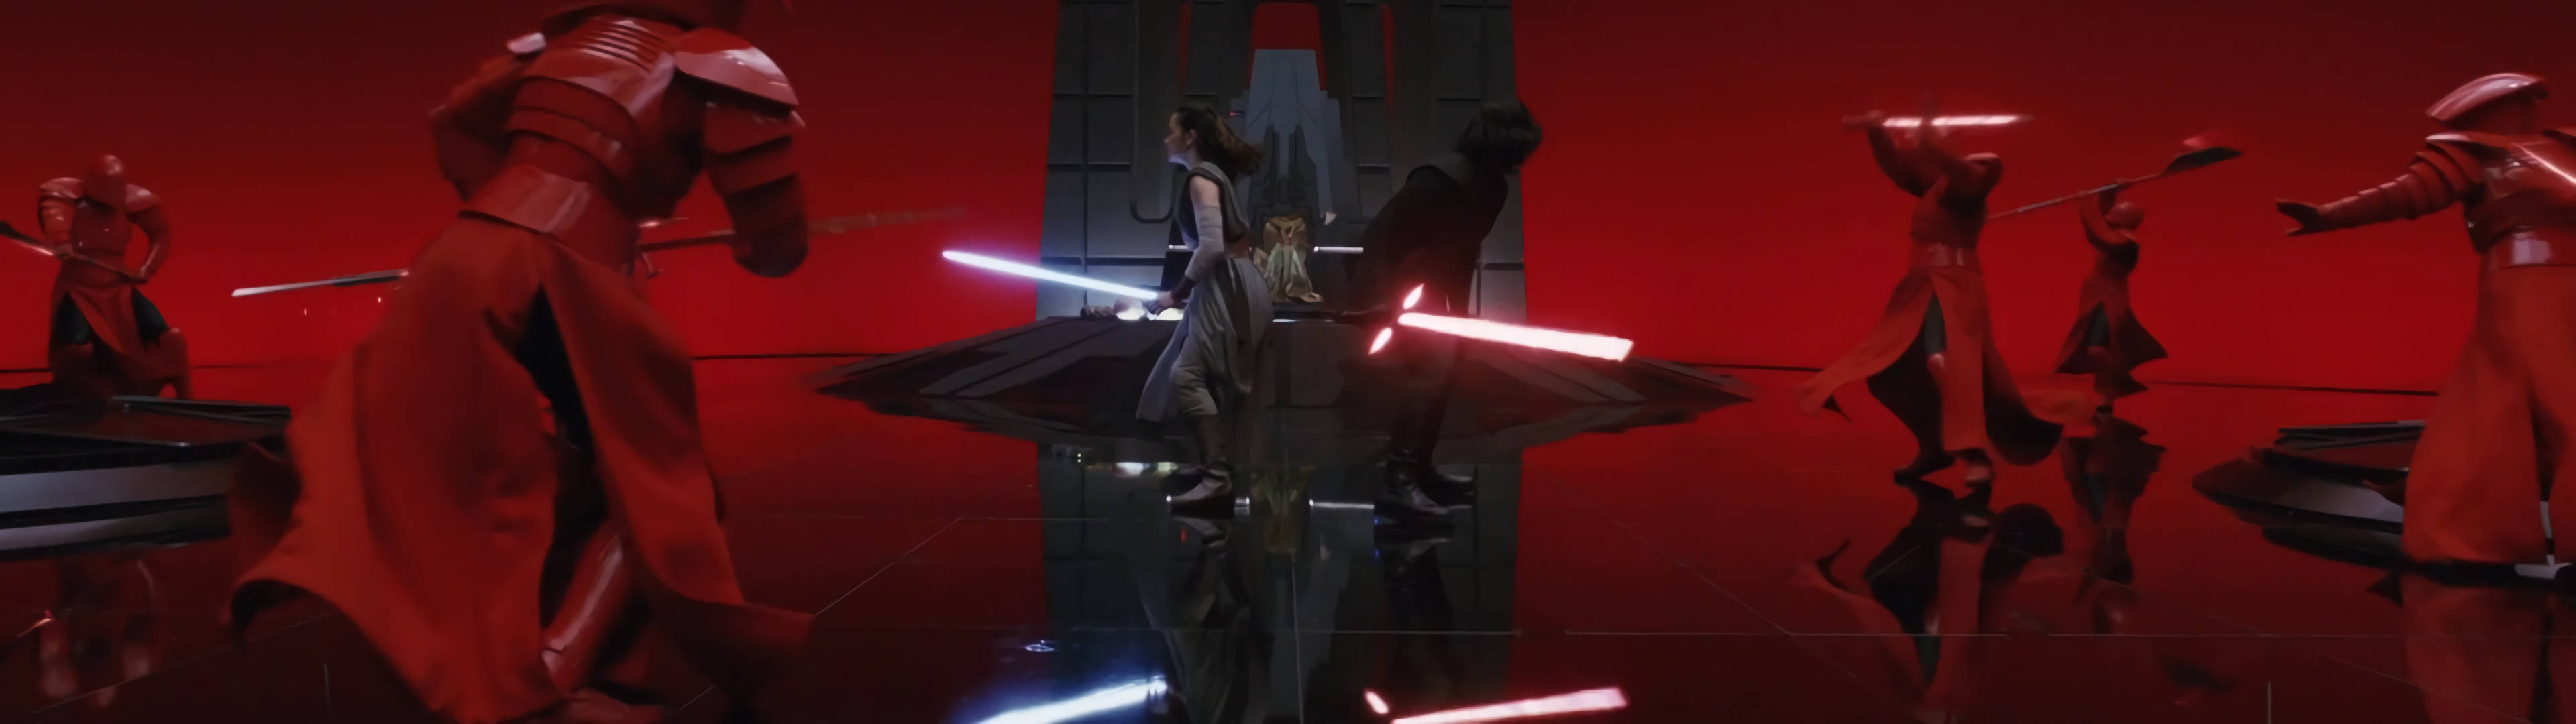 Star Wars Dual Screen The Last Jedi Battle Background